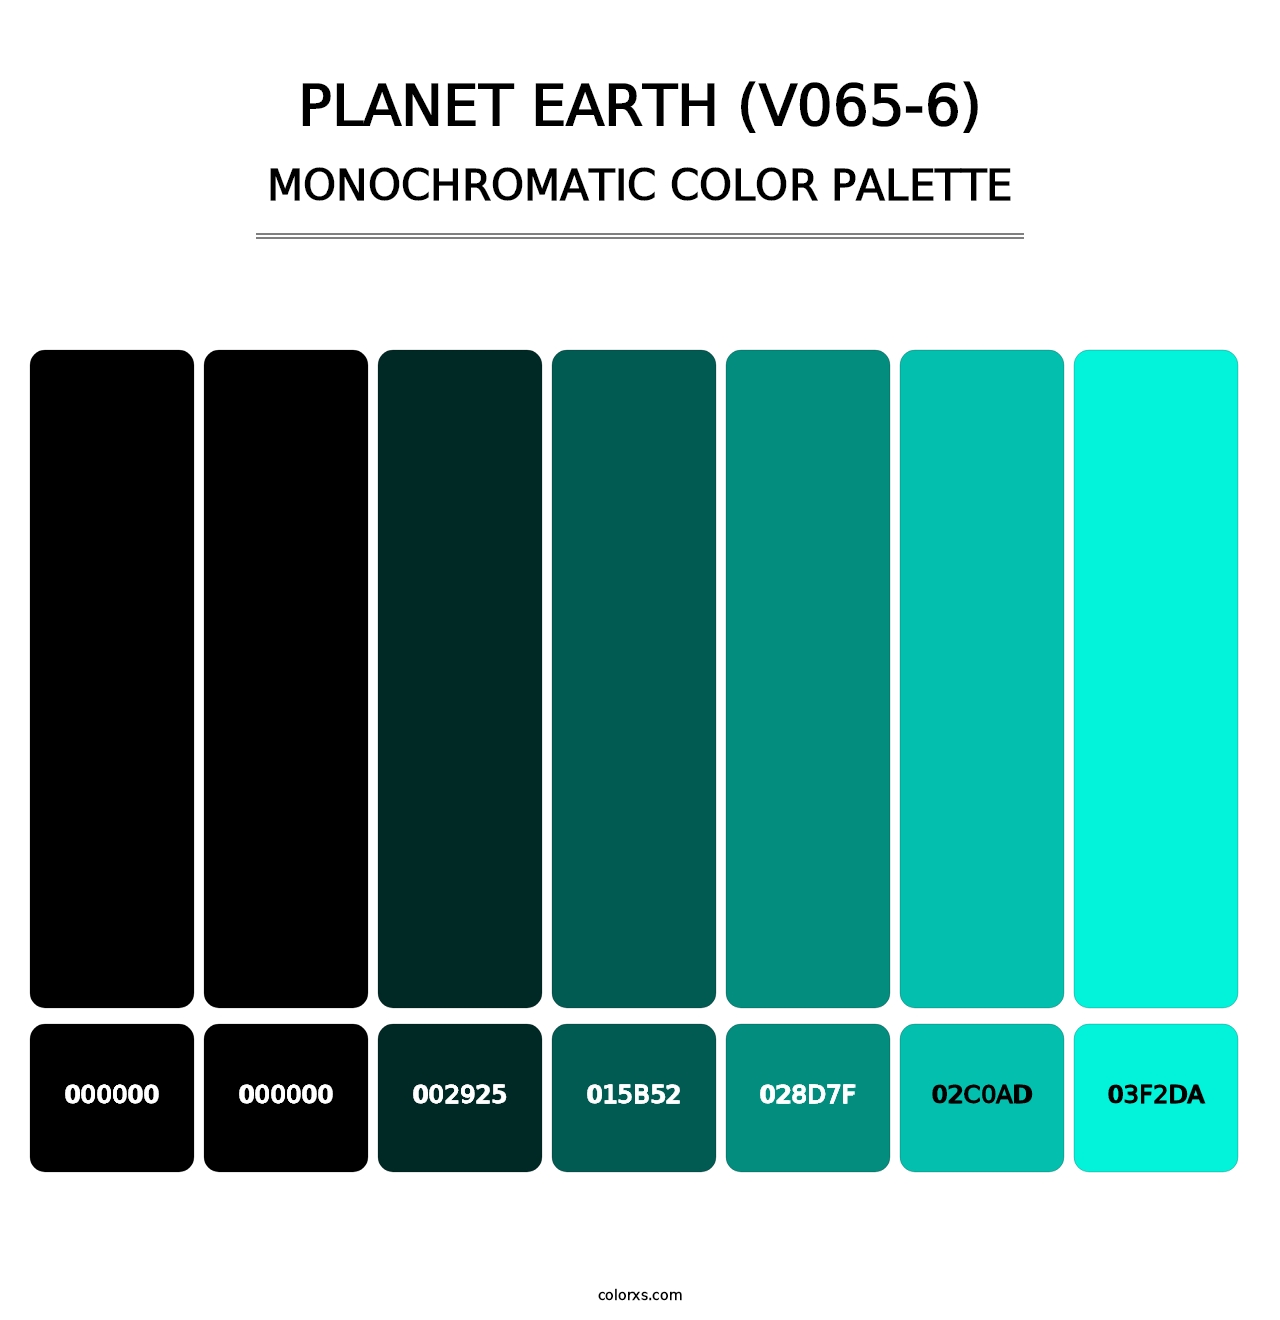 Planet Earth (V065-6) - Monochromatic Color Palette